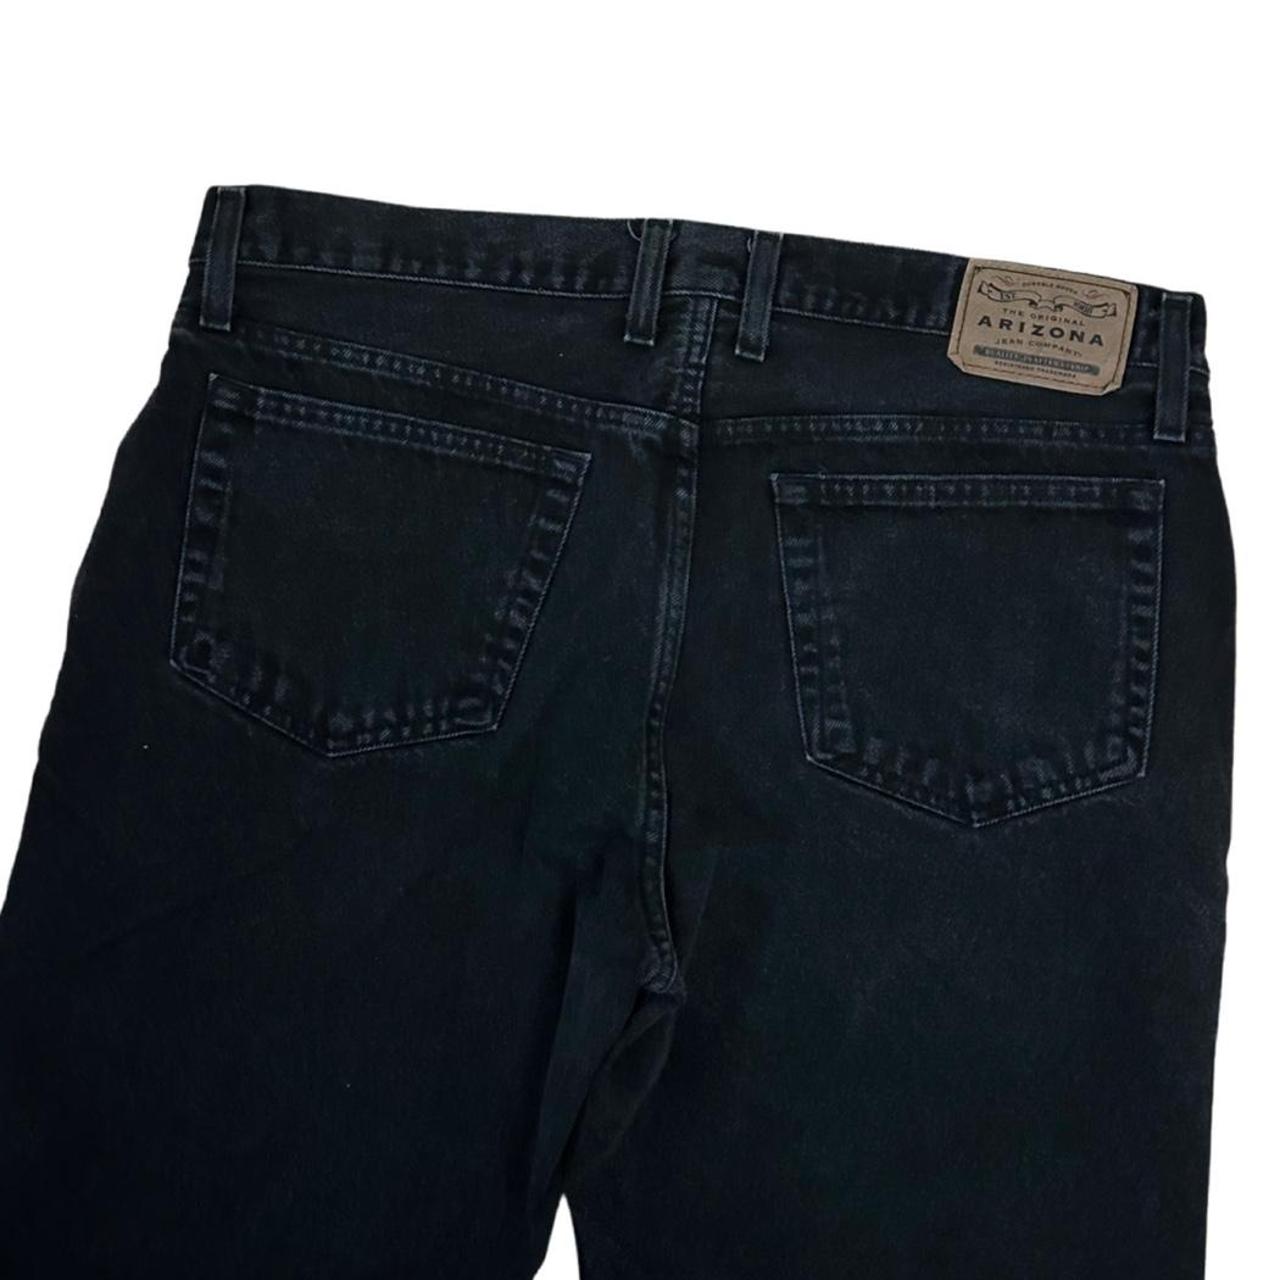 Southpole Men's Black Jeans | Depop